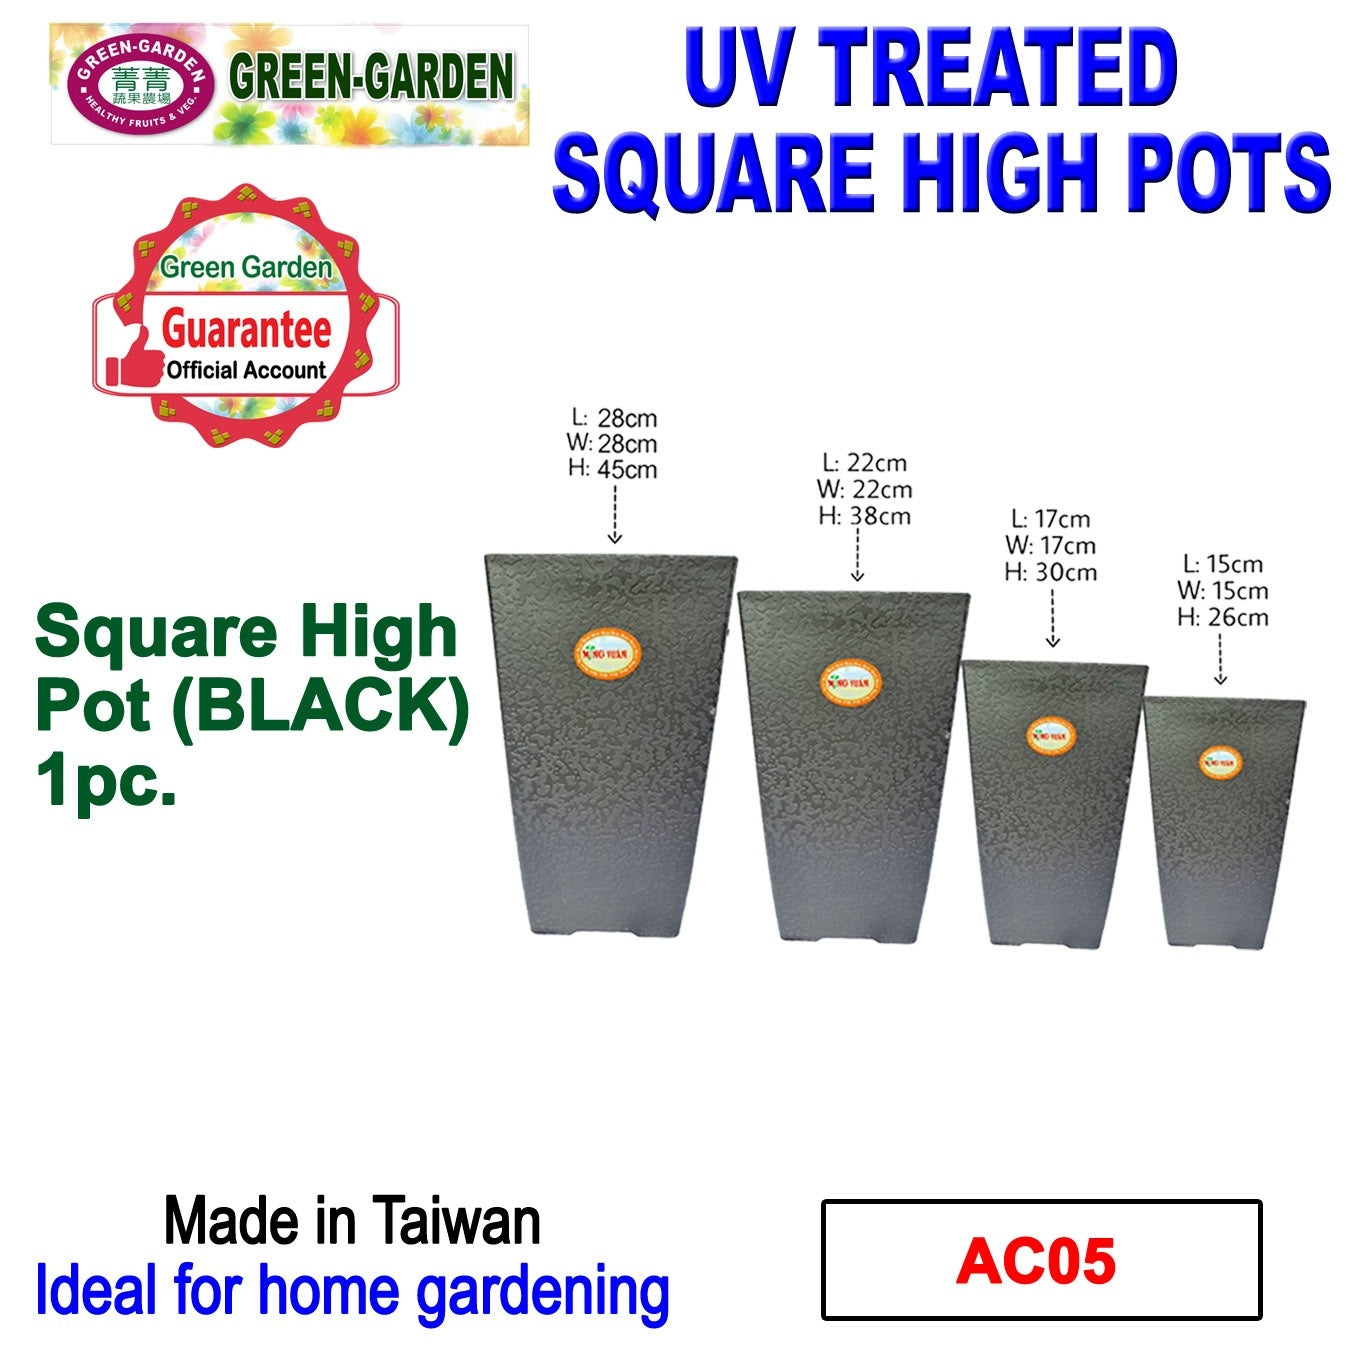 UV TREATED Square High Pot Size: 17x17x30cm